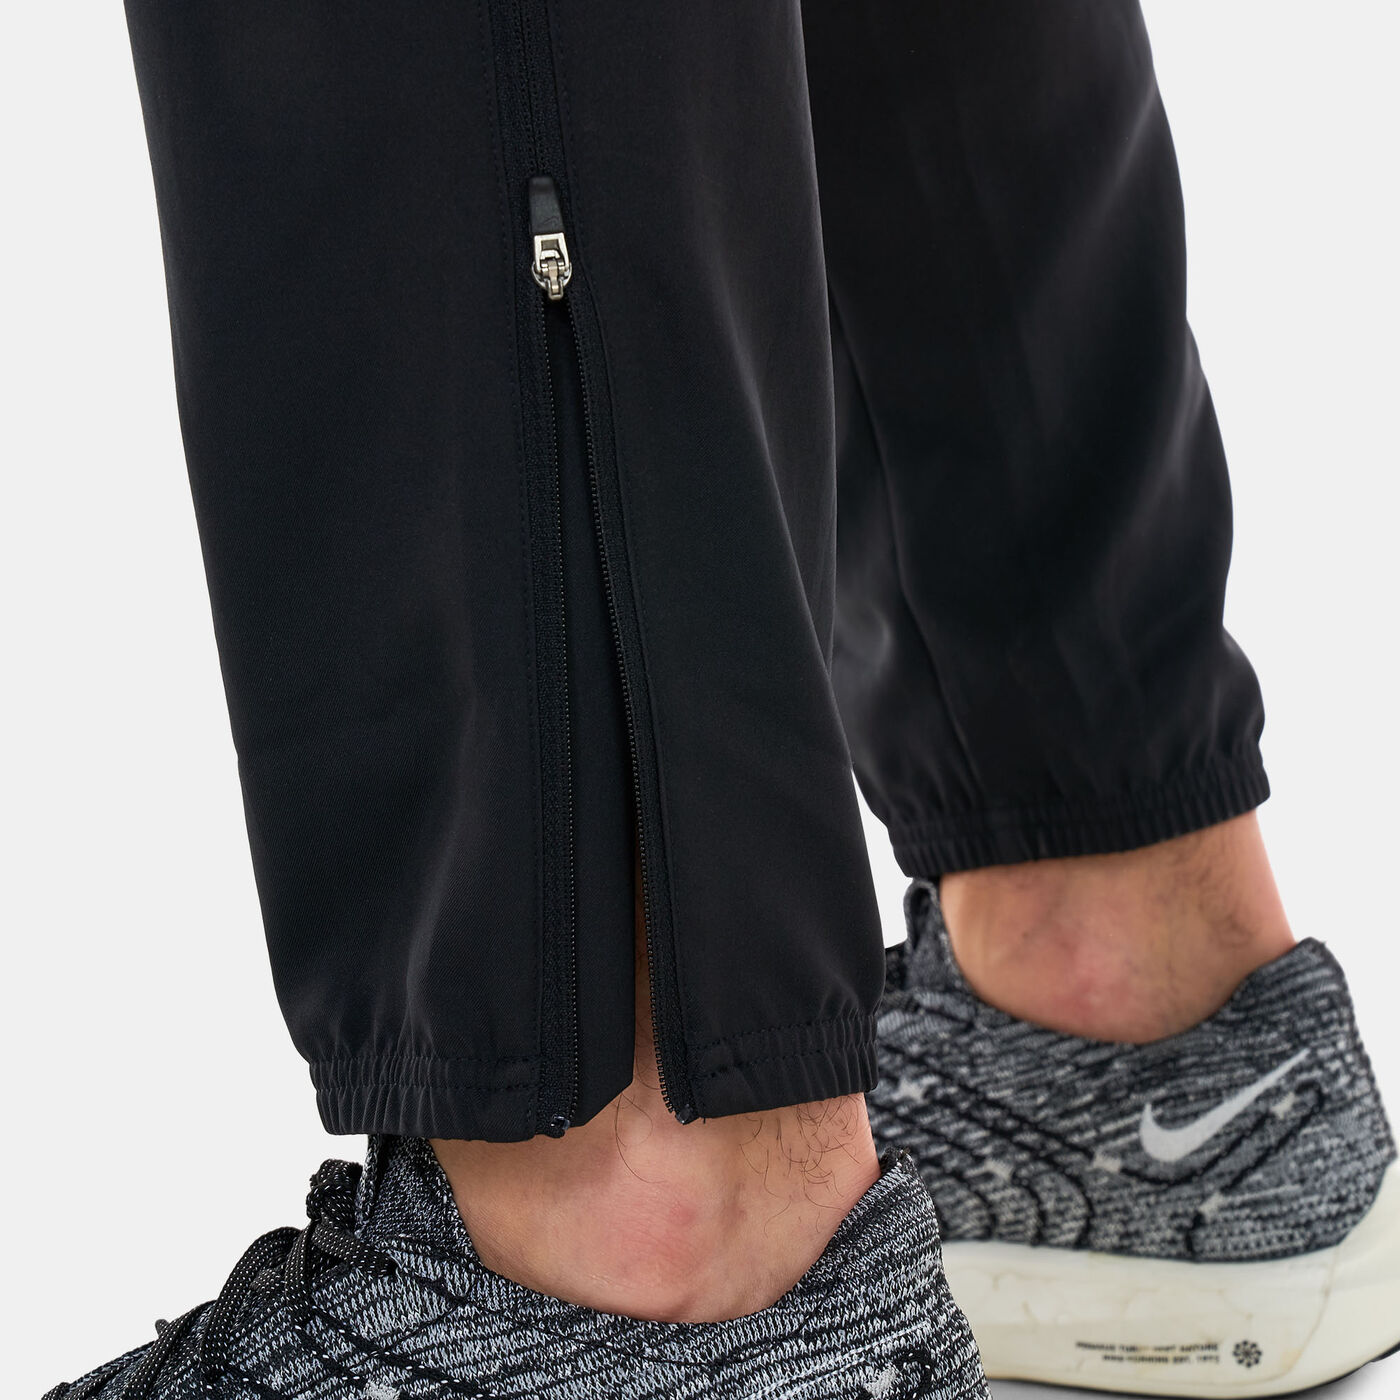 Men's Dri-FIT Woven Running Pants